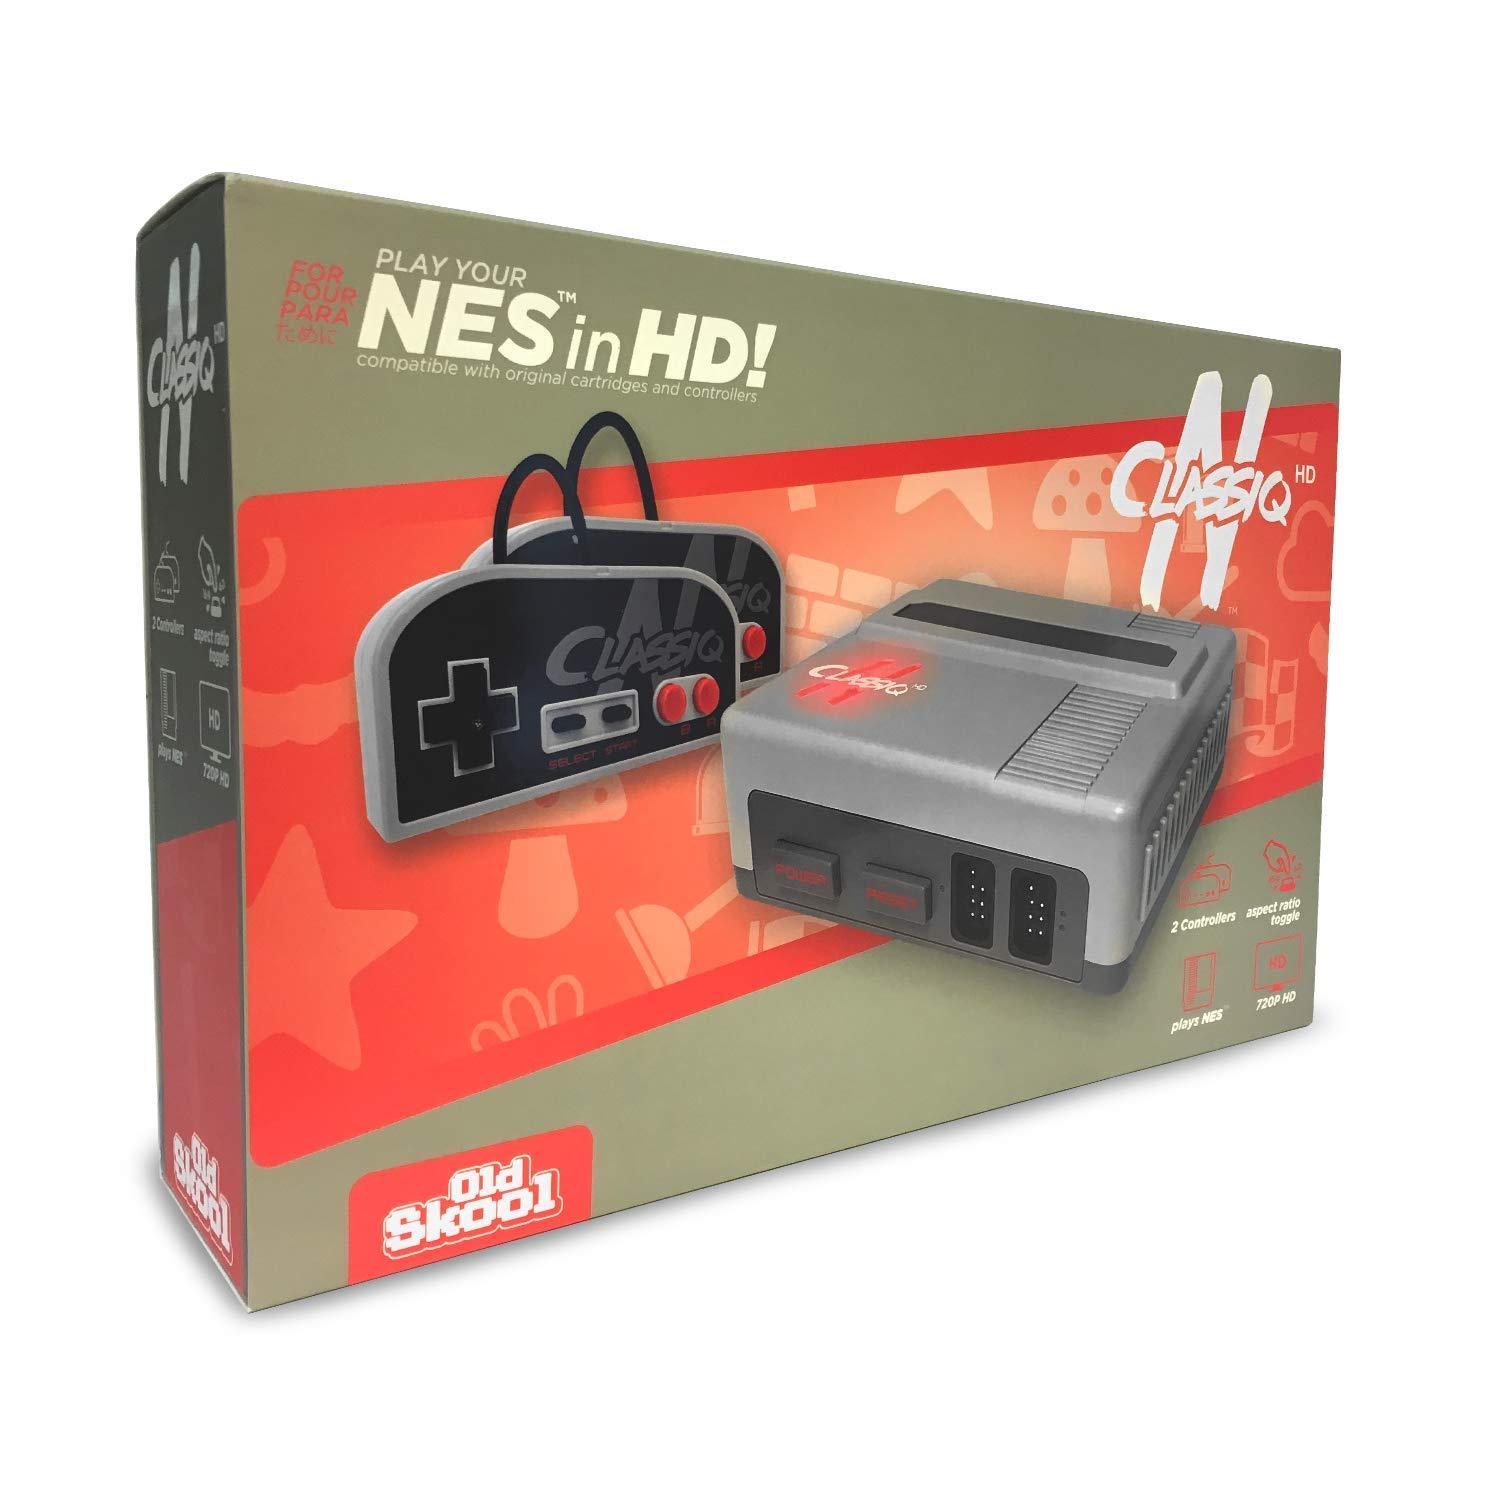 J2Games.com | Classiq N Nintendo Console HD (Old Skool) (Brand New).